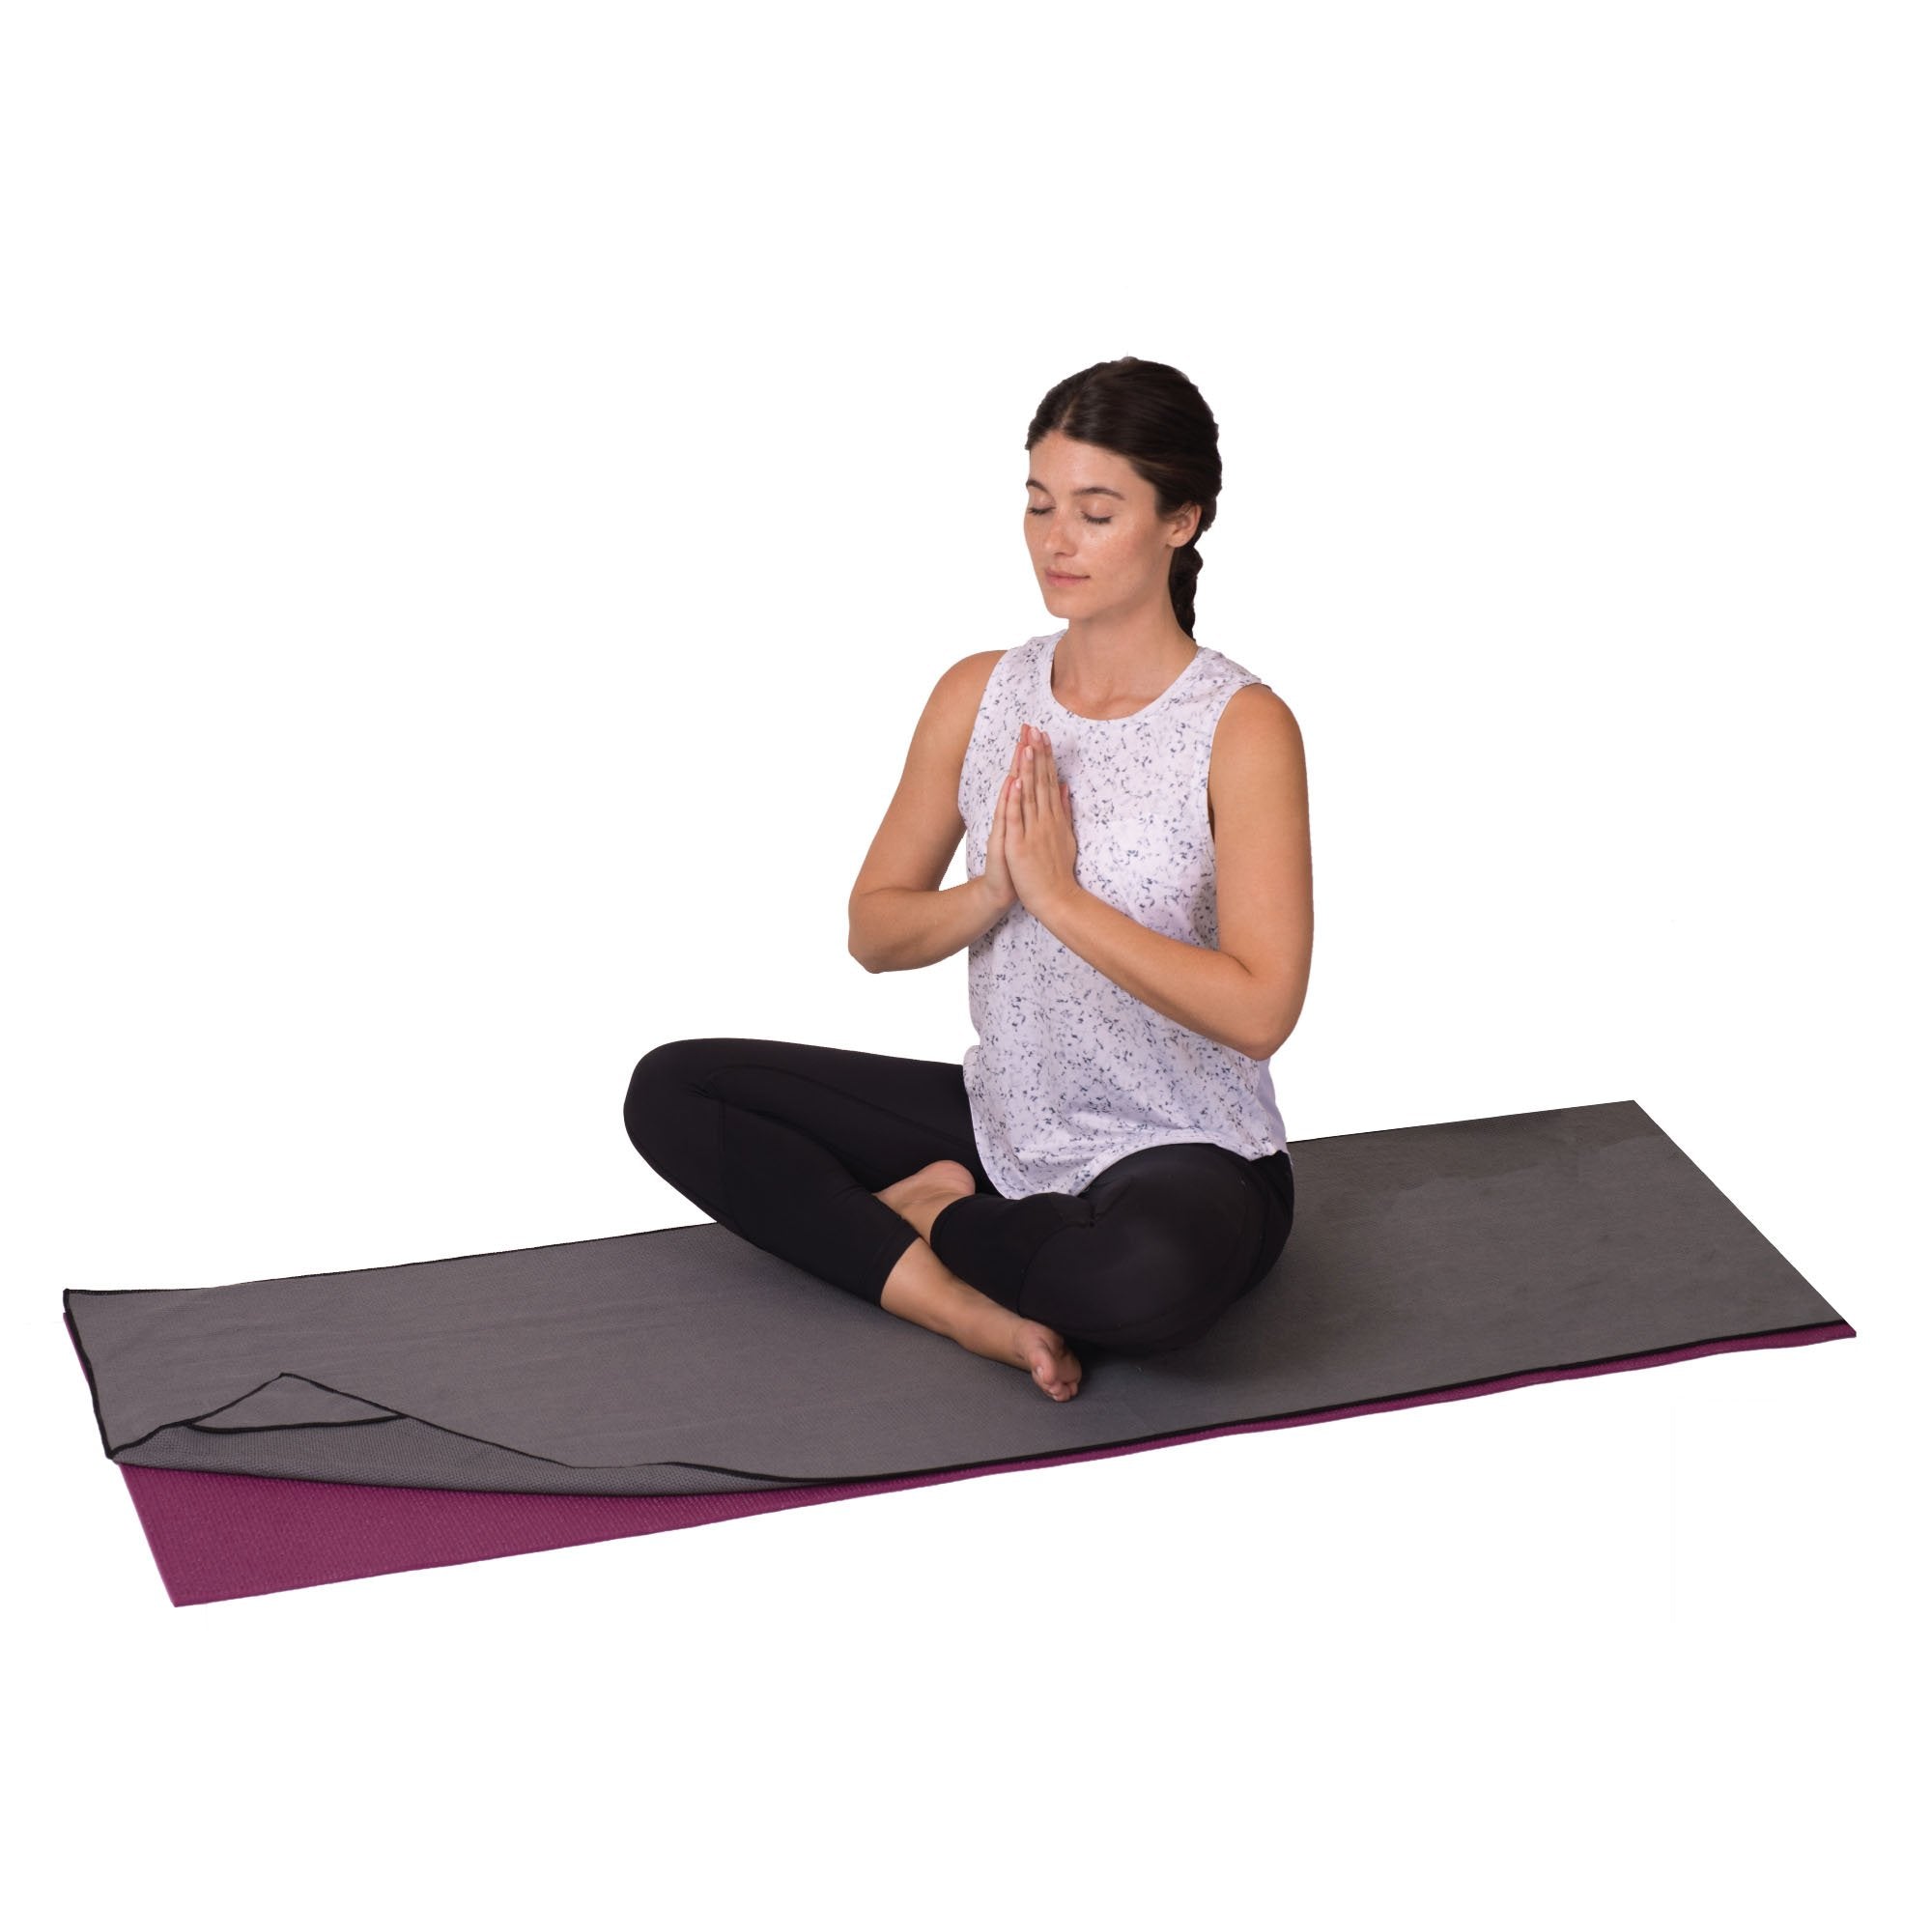 Zenzation Athletics Microfibre Hot Yoga & Fitness Towel - 72 x 24